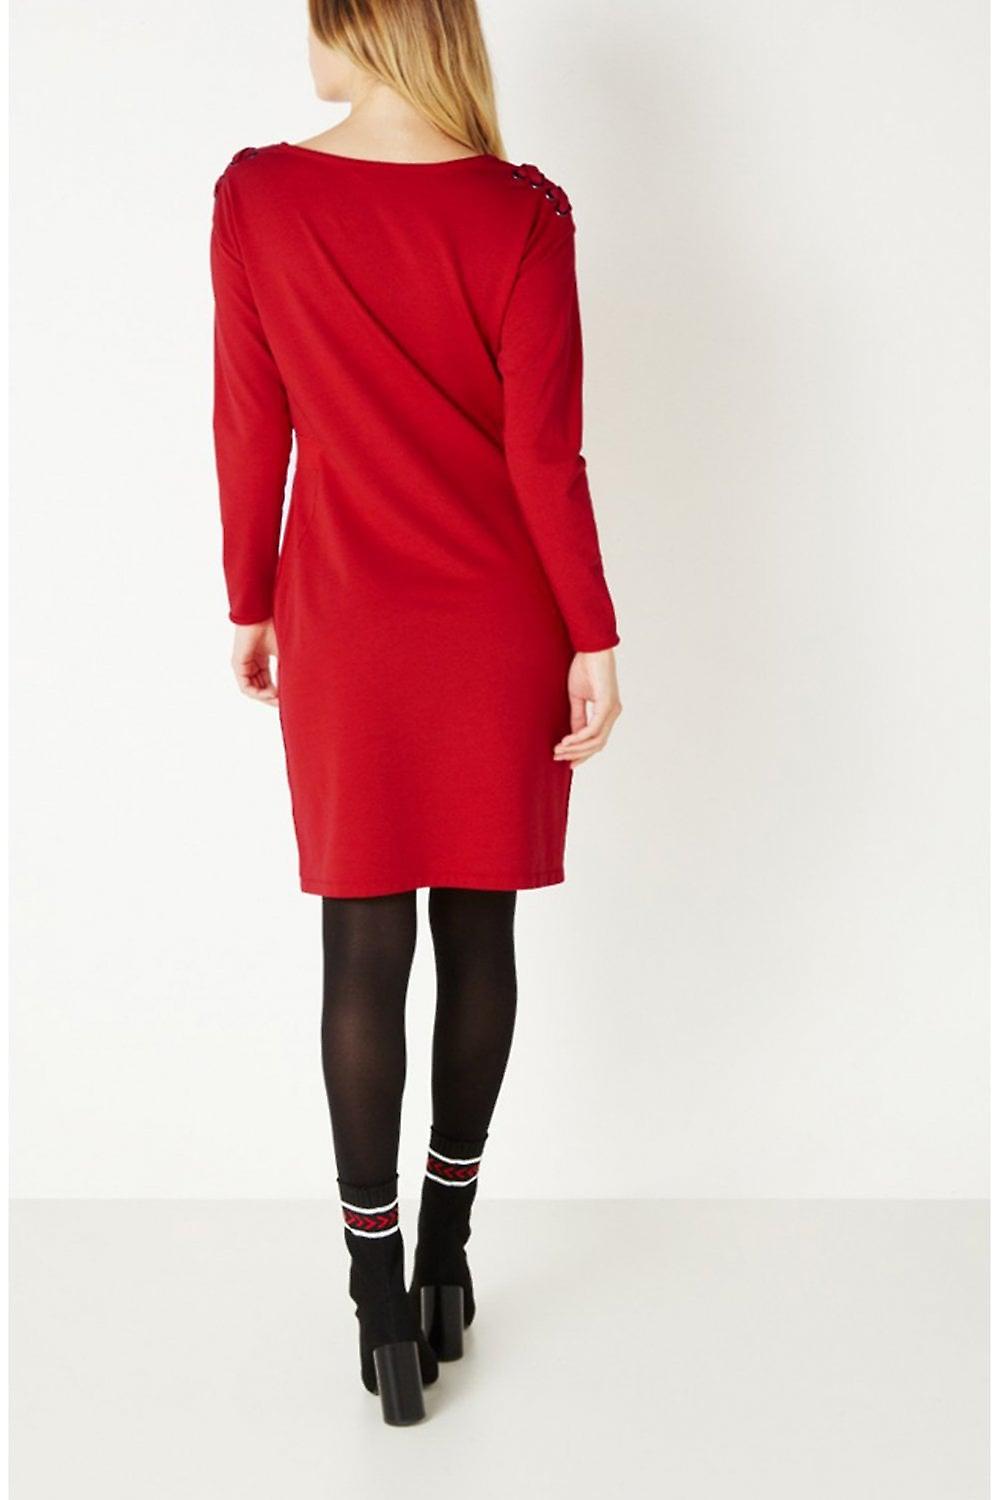 Vulkaan comfort Kwalificatie Sandwich jurk sweater met lace up schouder rood - Vegas For Her jurk  Diverse JippieJurk